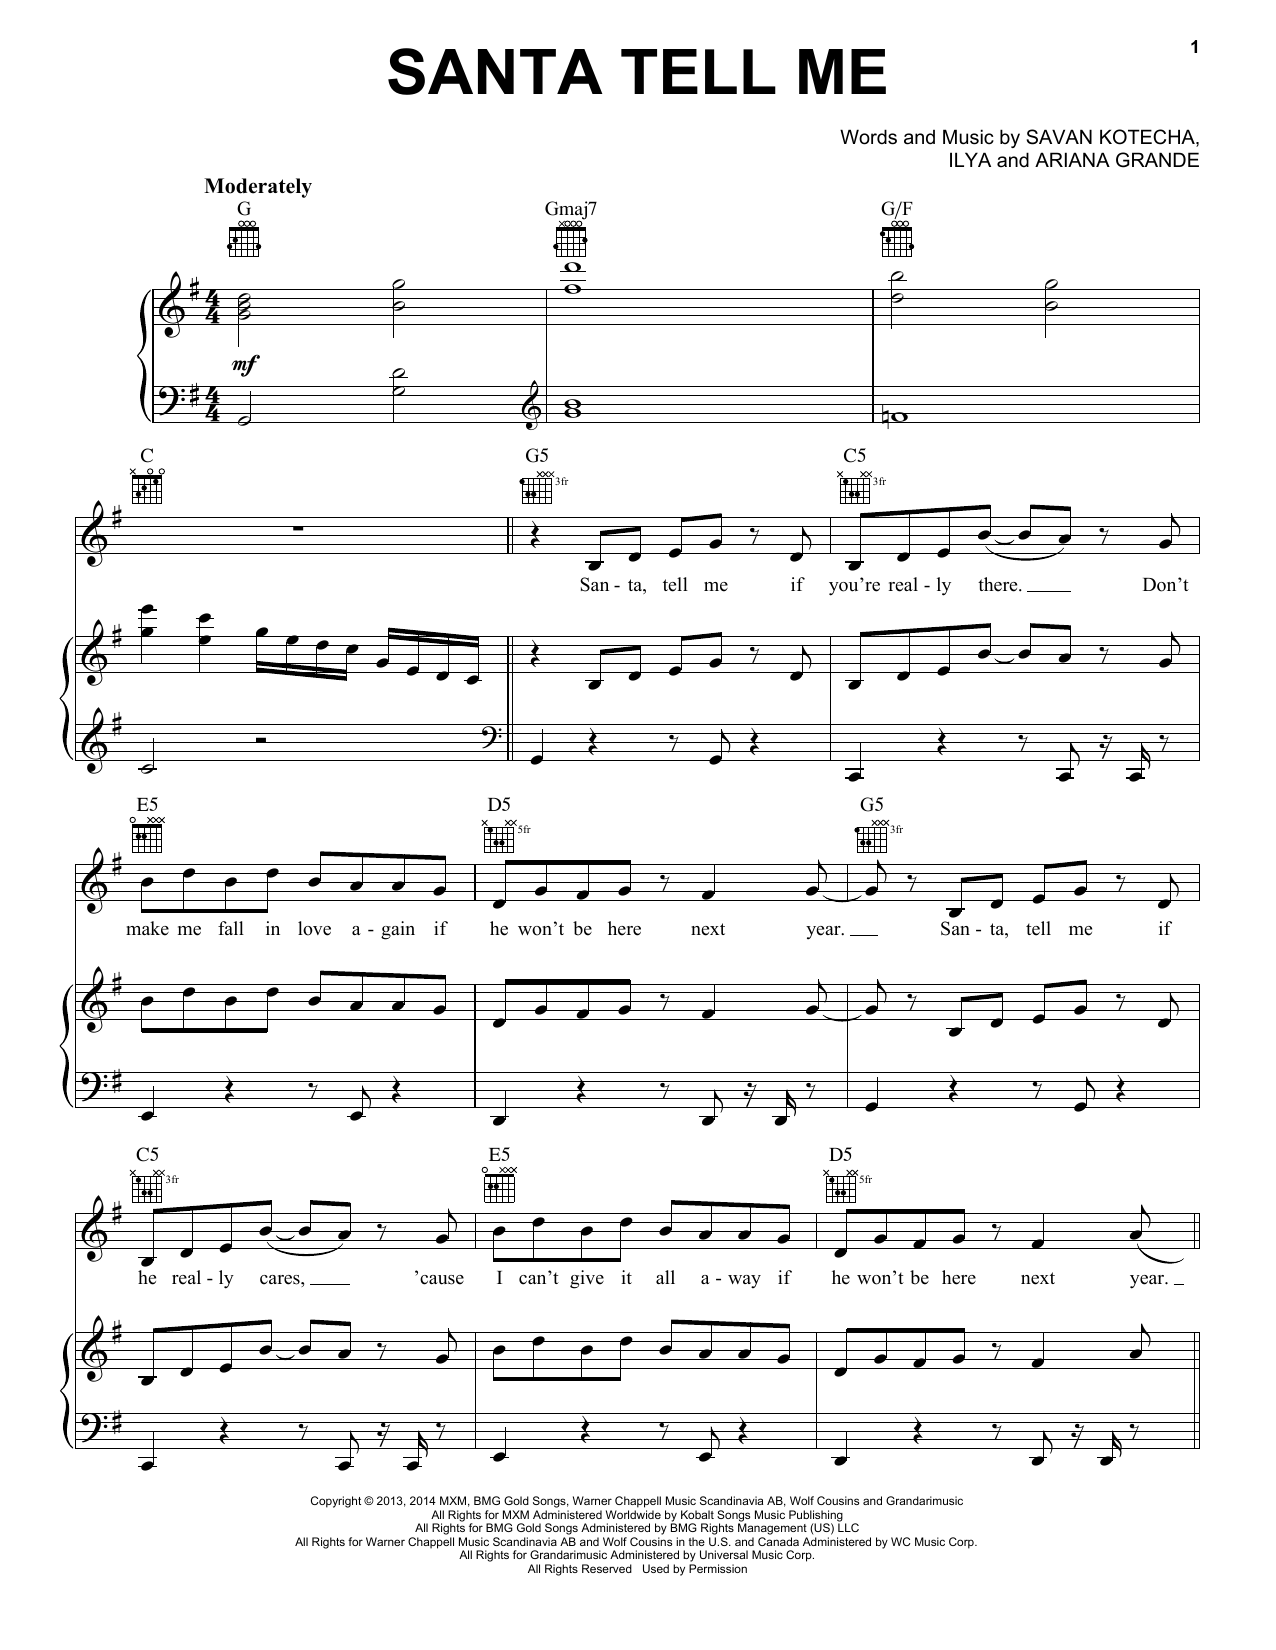 Ariana Grande Santa Tell Me Sheet Music Notes & Chords for Piano, Vocal & Guitar (Right-Hand Melody) - Download or Print PDF